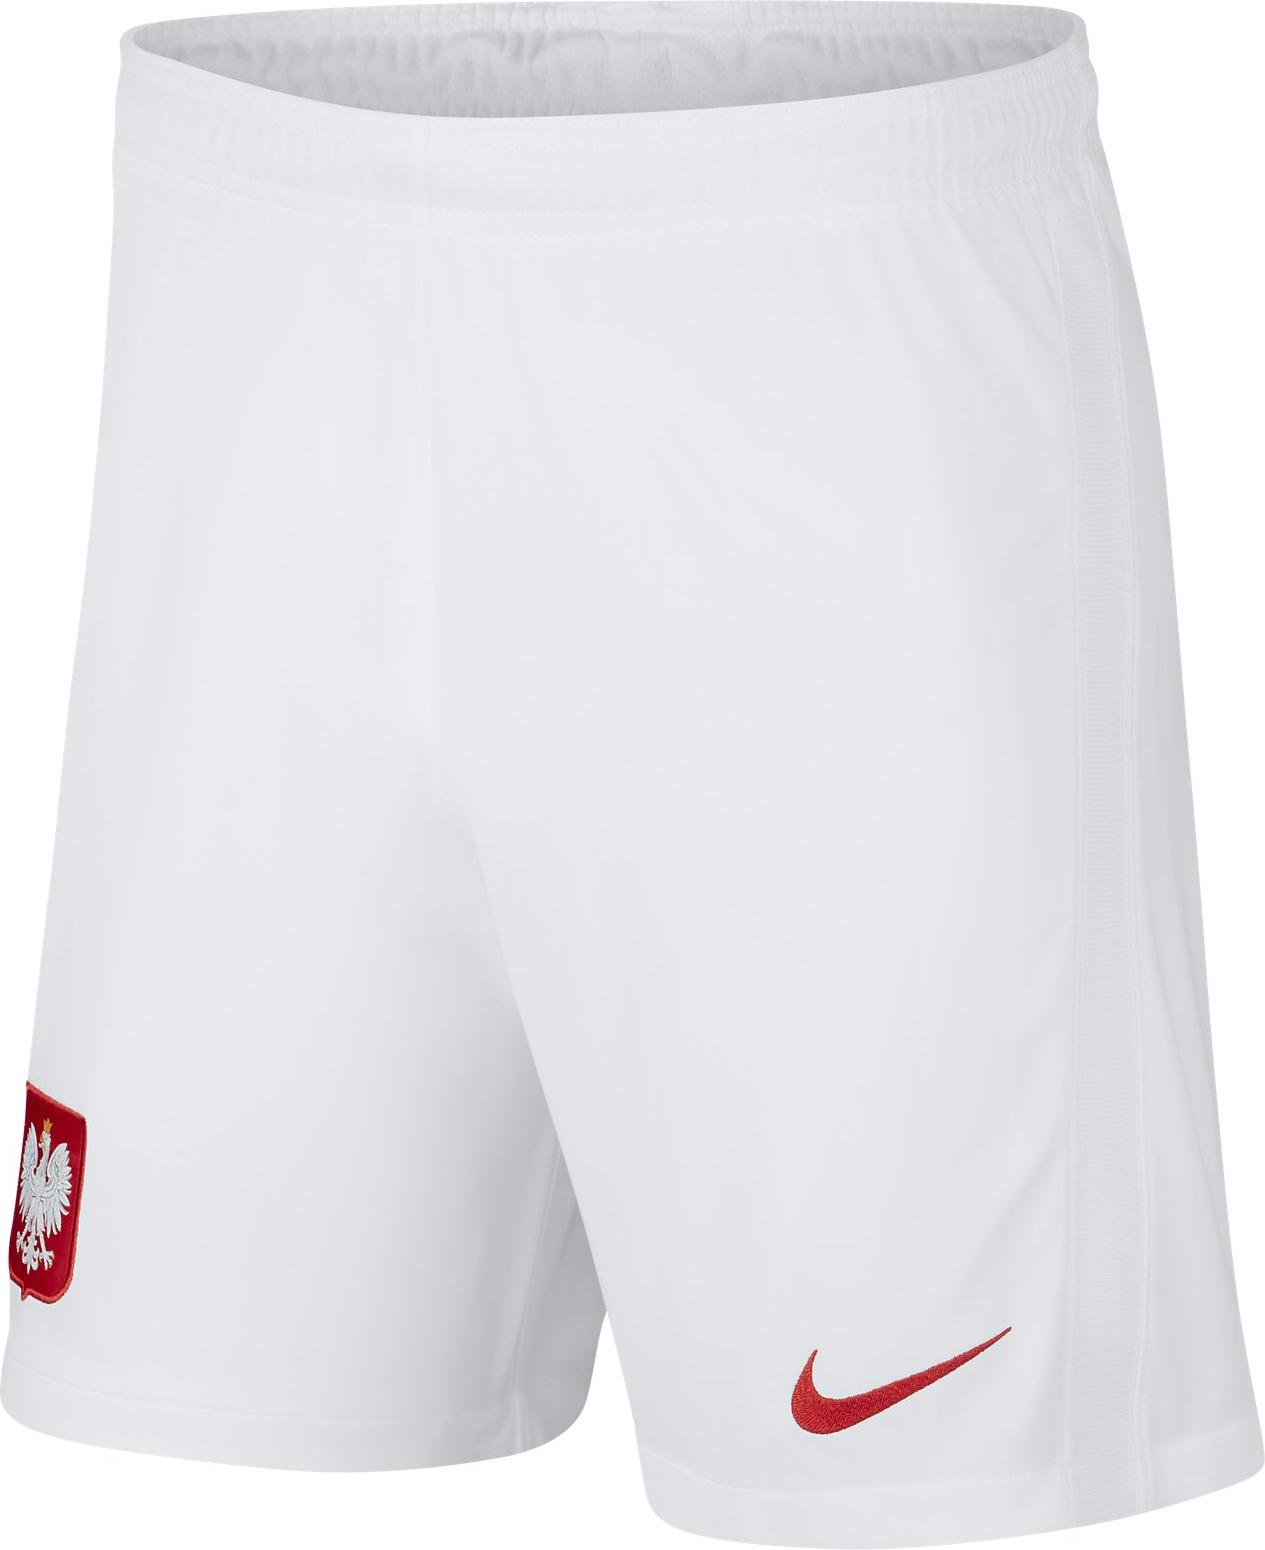 Shorts Nike Poland 2020 Stadium Home/Away